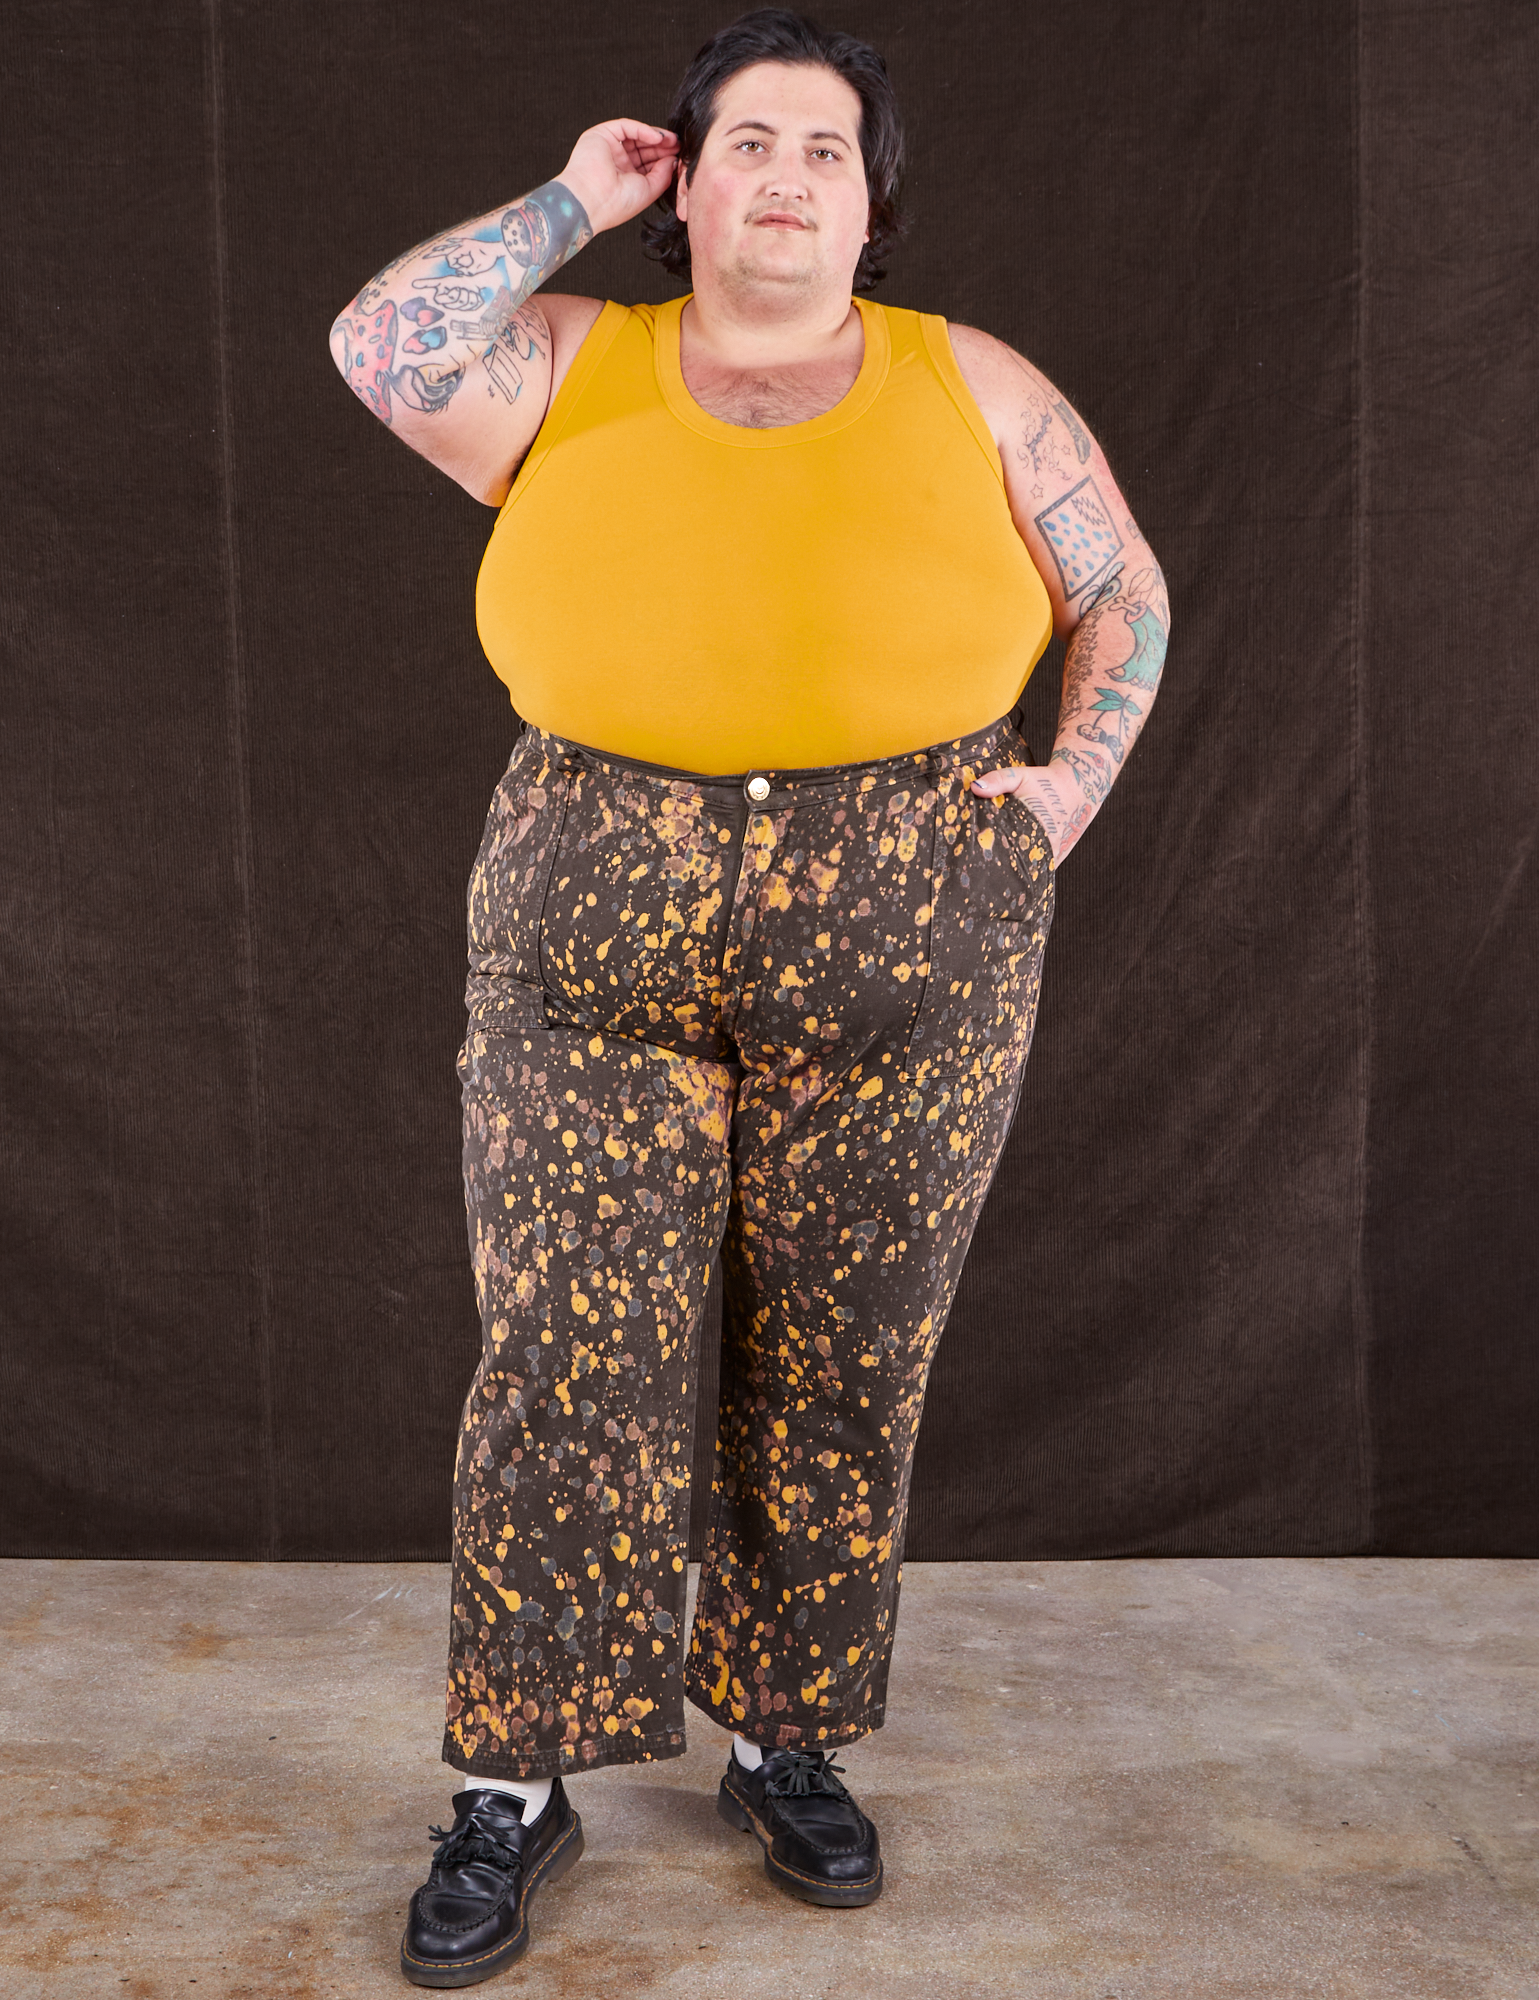 Sam is wearing Marble Splatter Work Pants in Espresso Brown and mustard yellow Tank Top